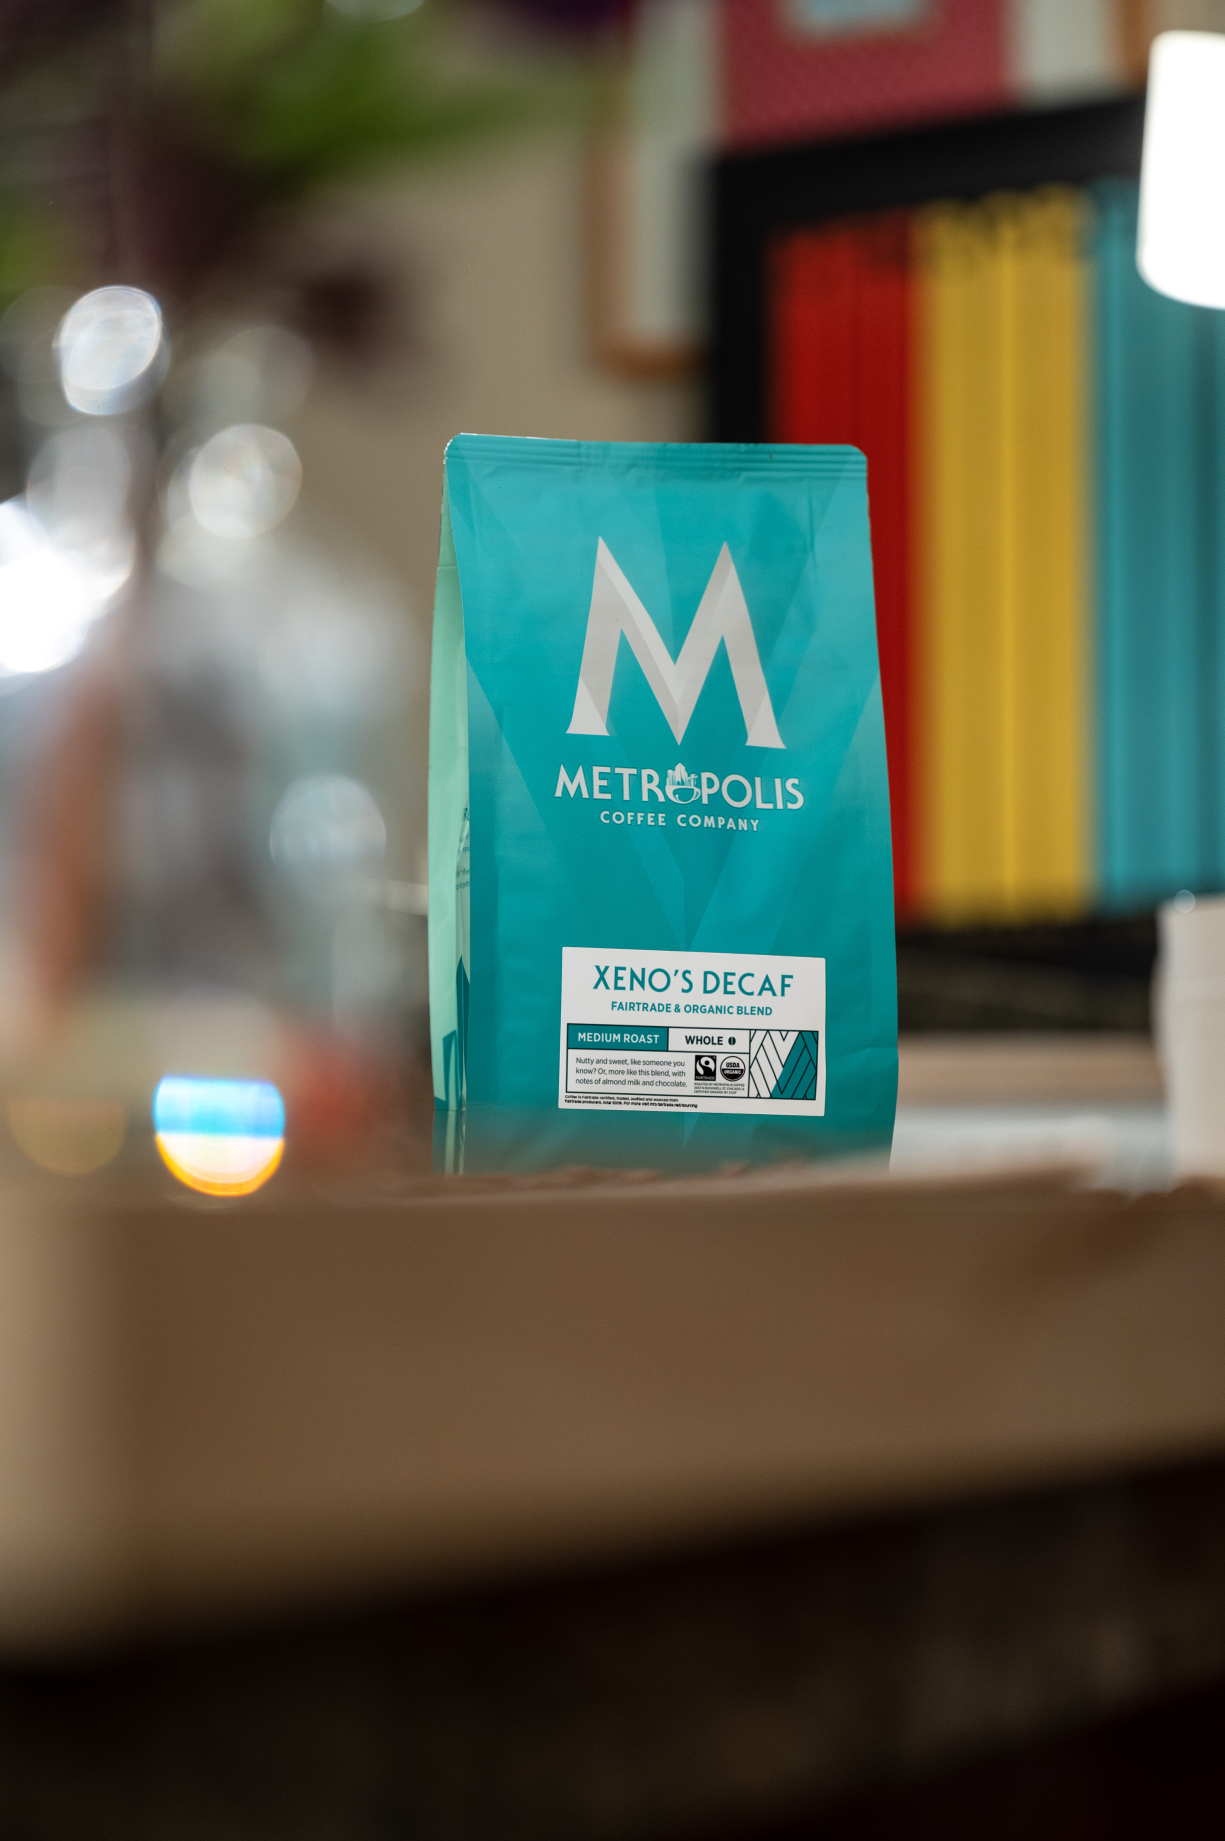 A bag of Metropolis Coffee Company's Xeno's Decaf, Fairtrade, Organic Coffee.